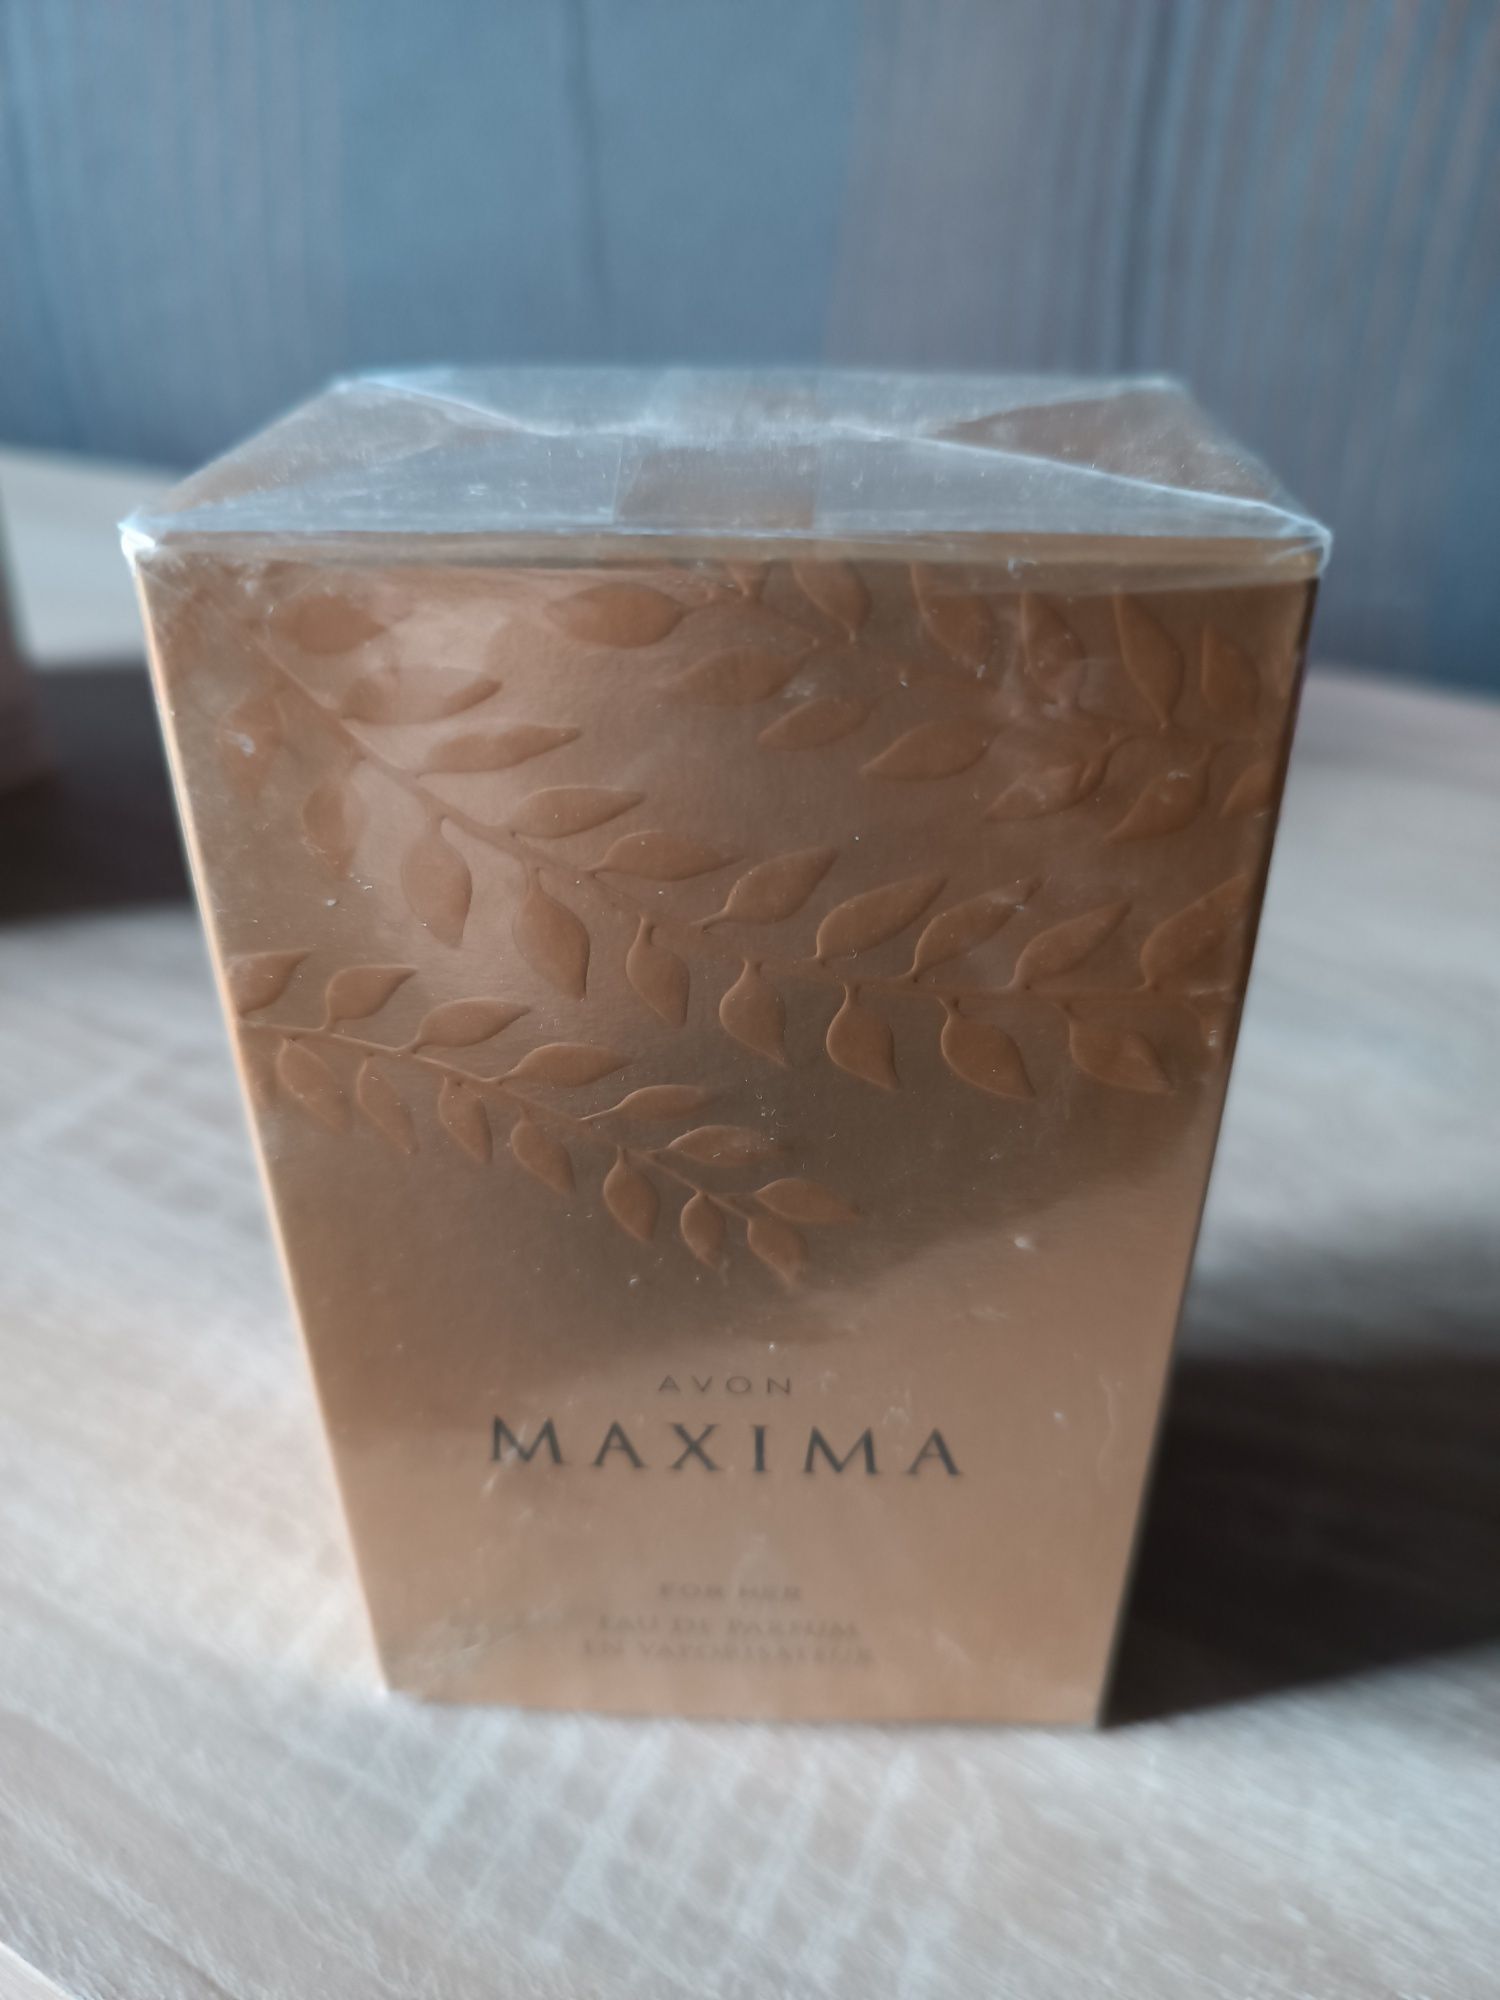 Avon Maxima 50мл парфумована вода парфуми Максіма ейвон Ейвон Максима